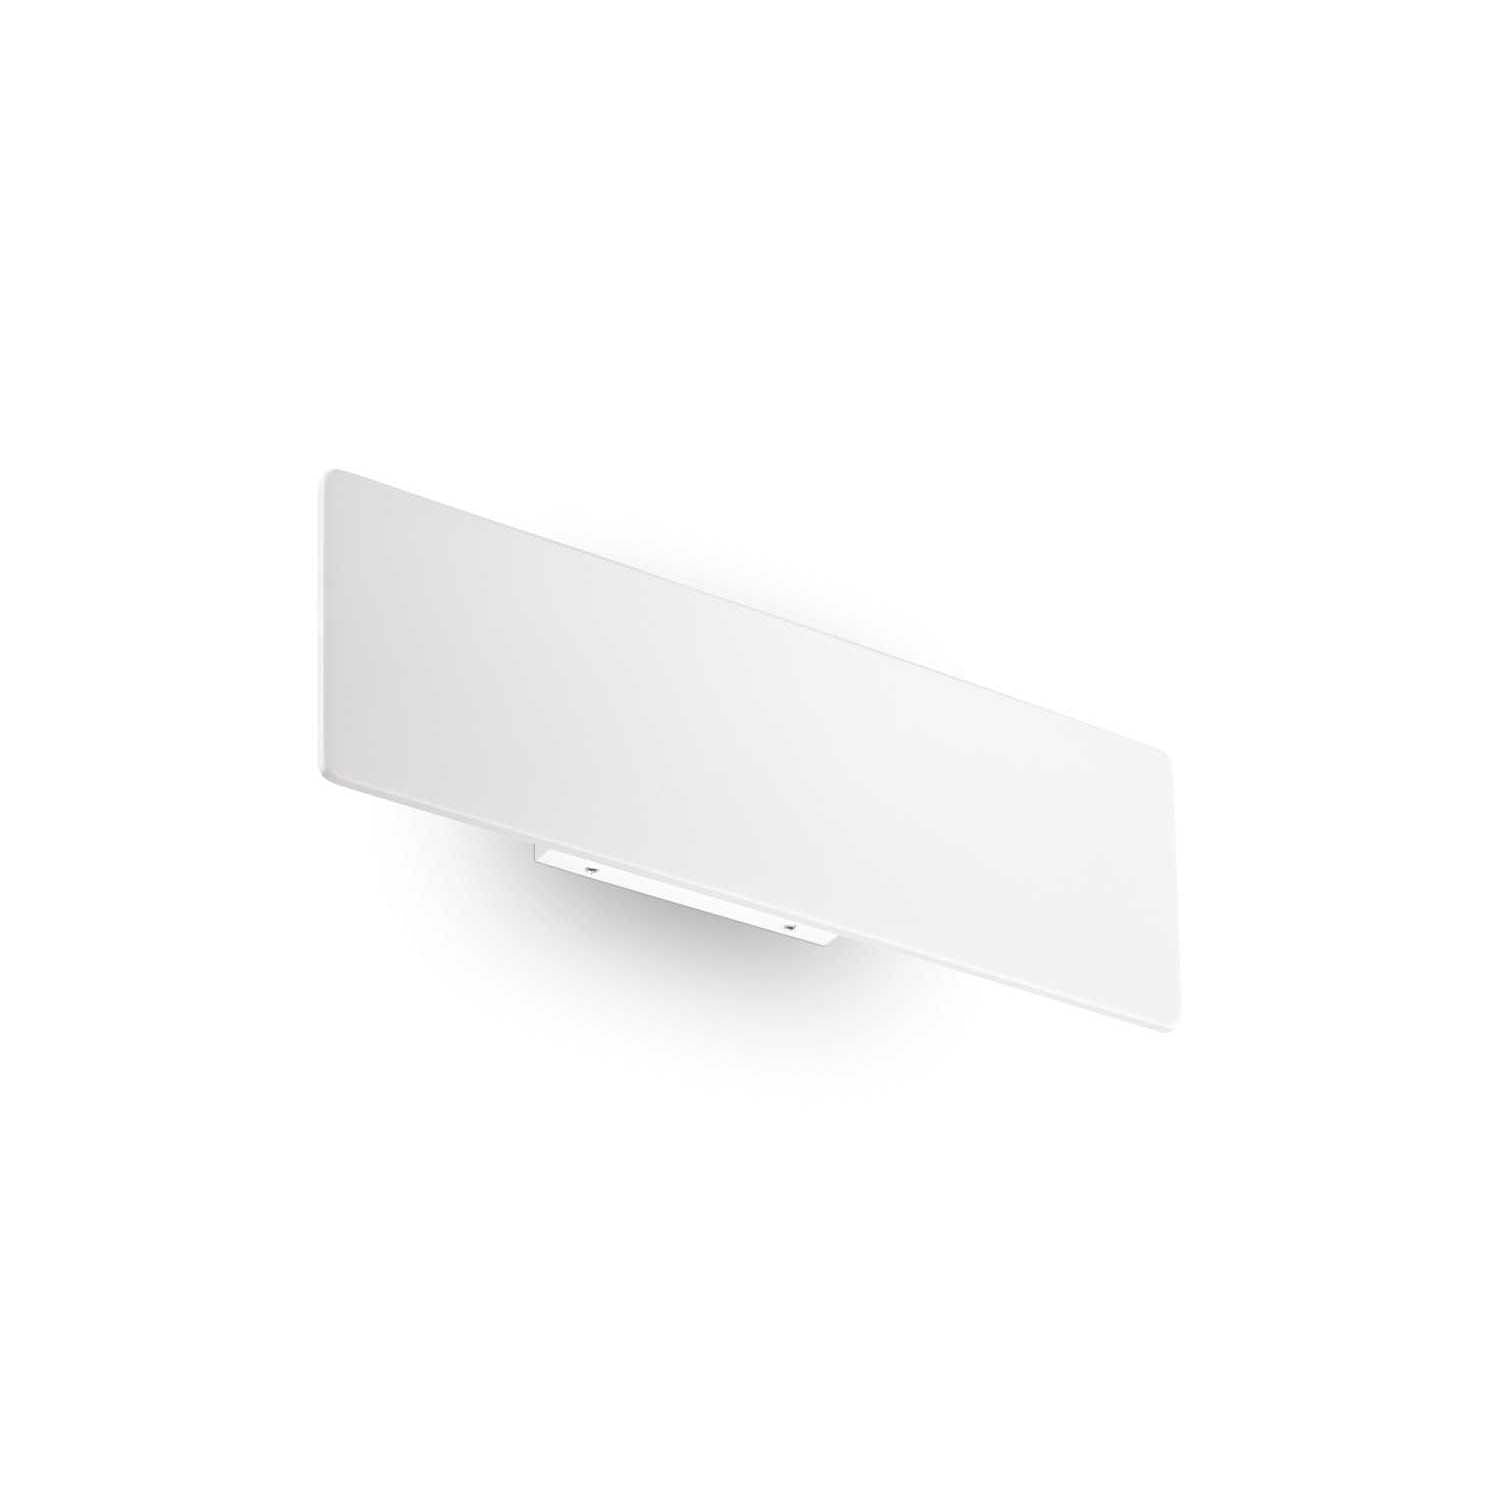 ZIG ZAG – Integrierte LED-Panel-Wandleuchte, verschiedene Farben